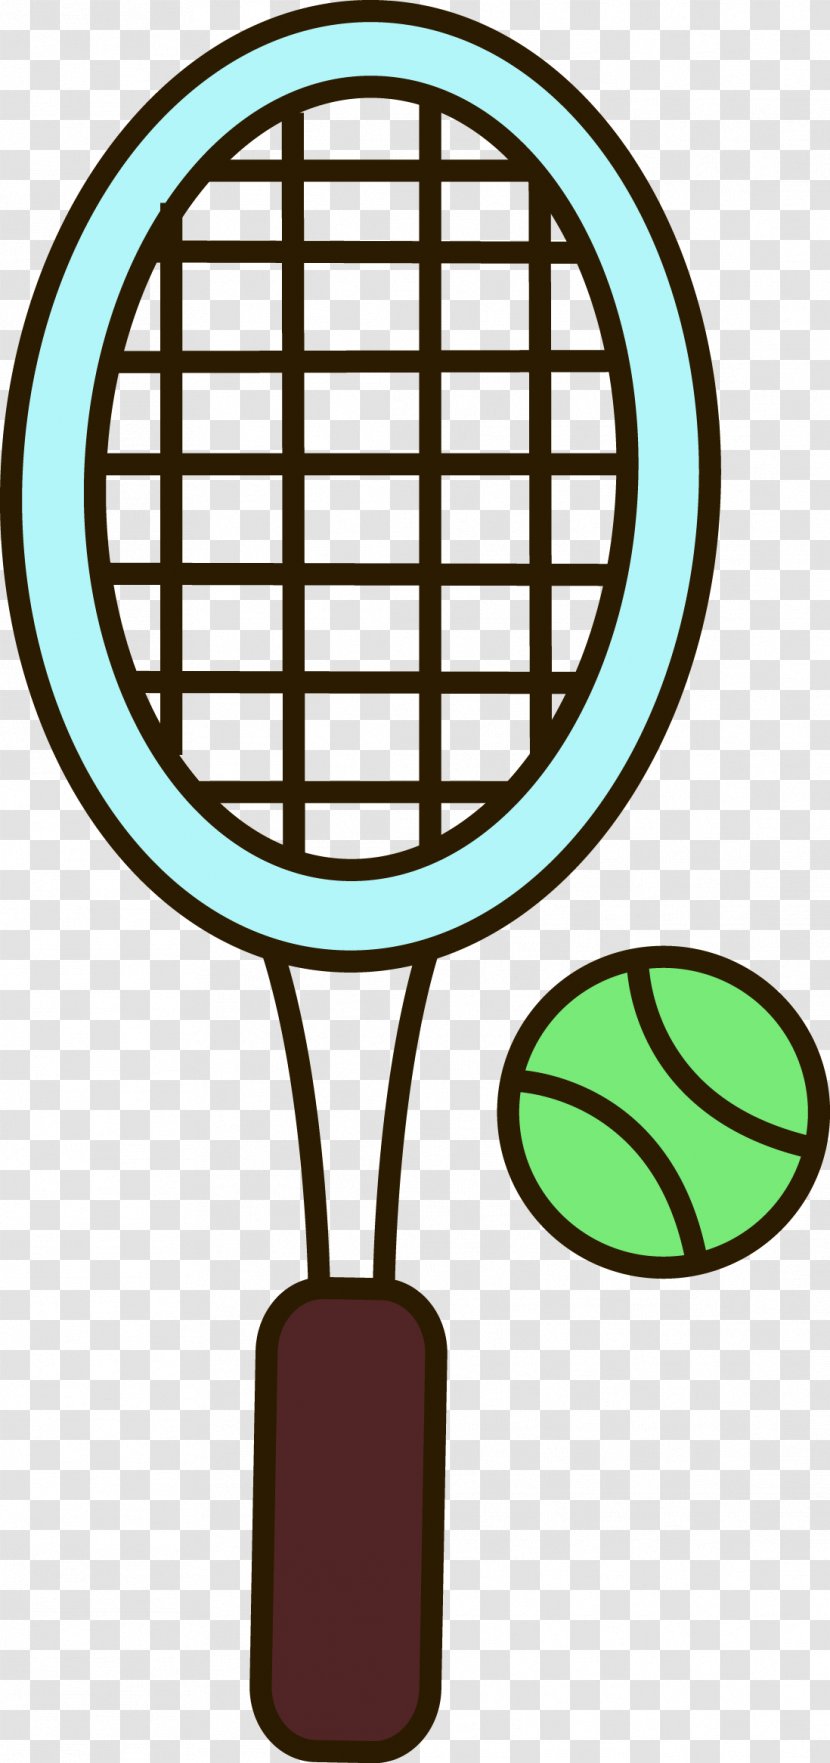 Tennis Rakieta Tenisowa Racket Illustration Image Transparent PNG